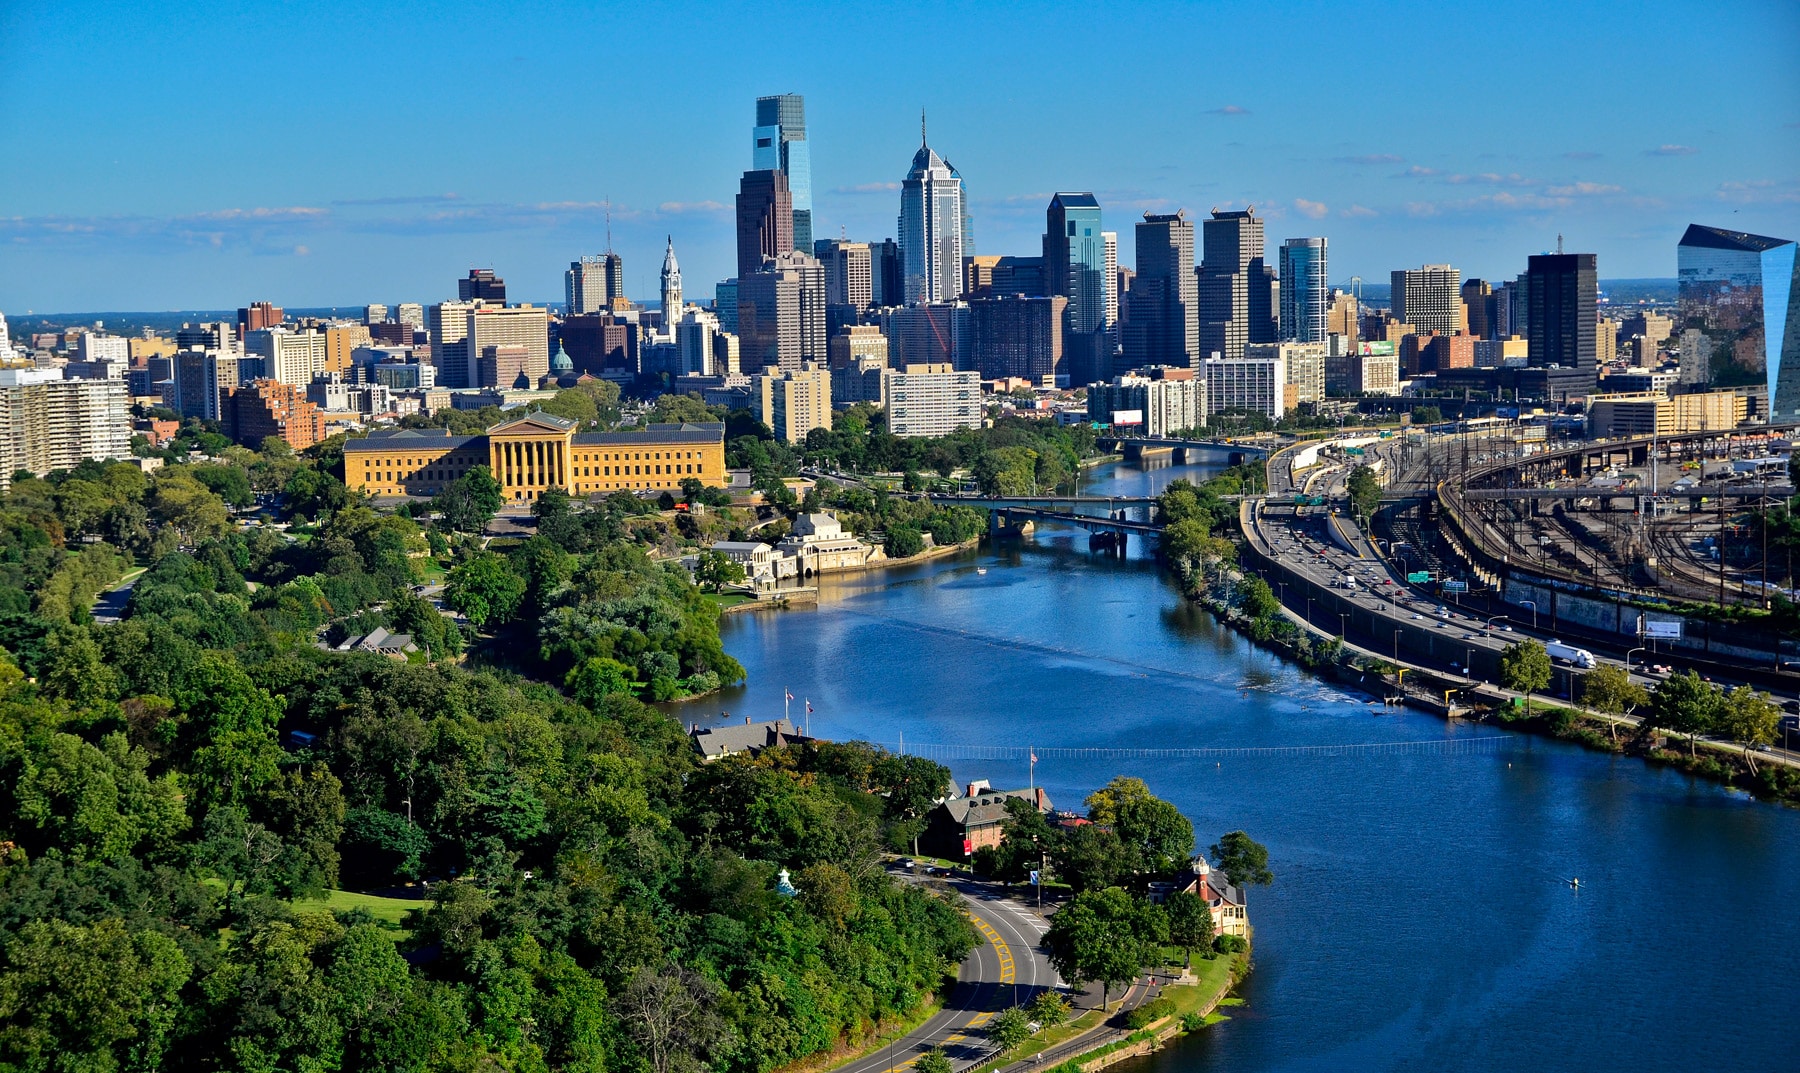 City skyline of downtown Philadelphia, Pennsylvania